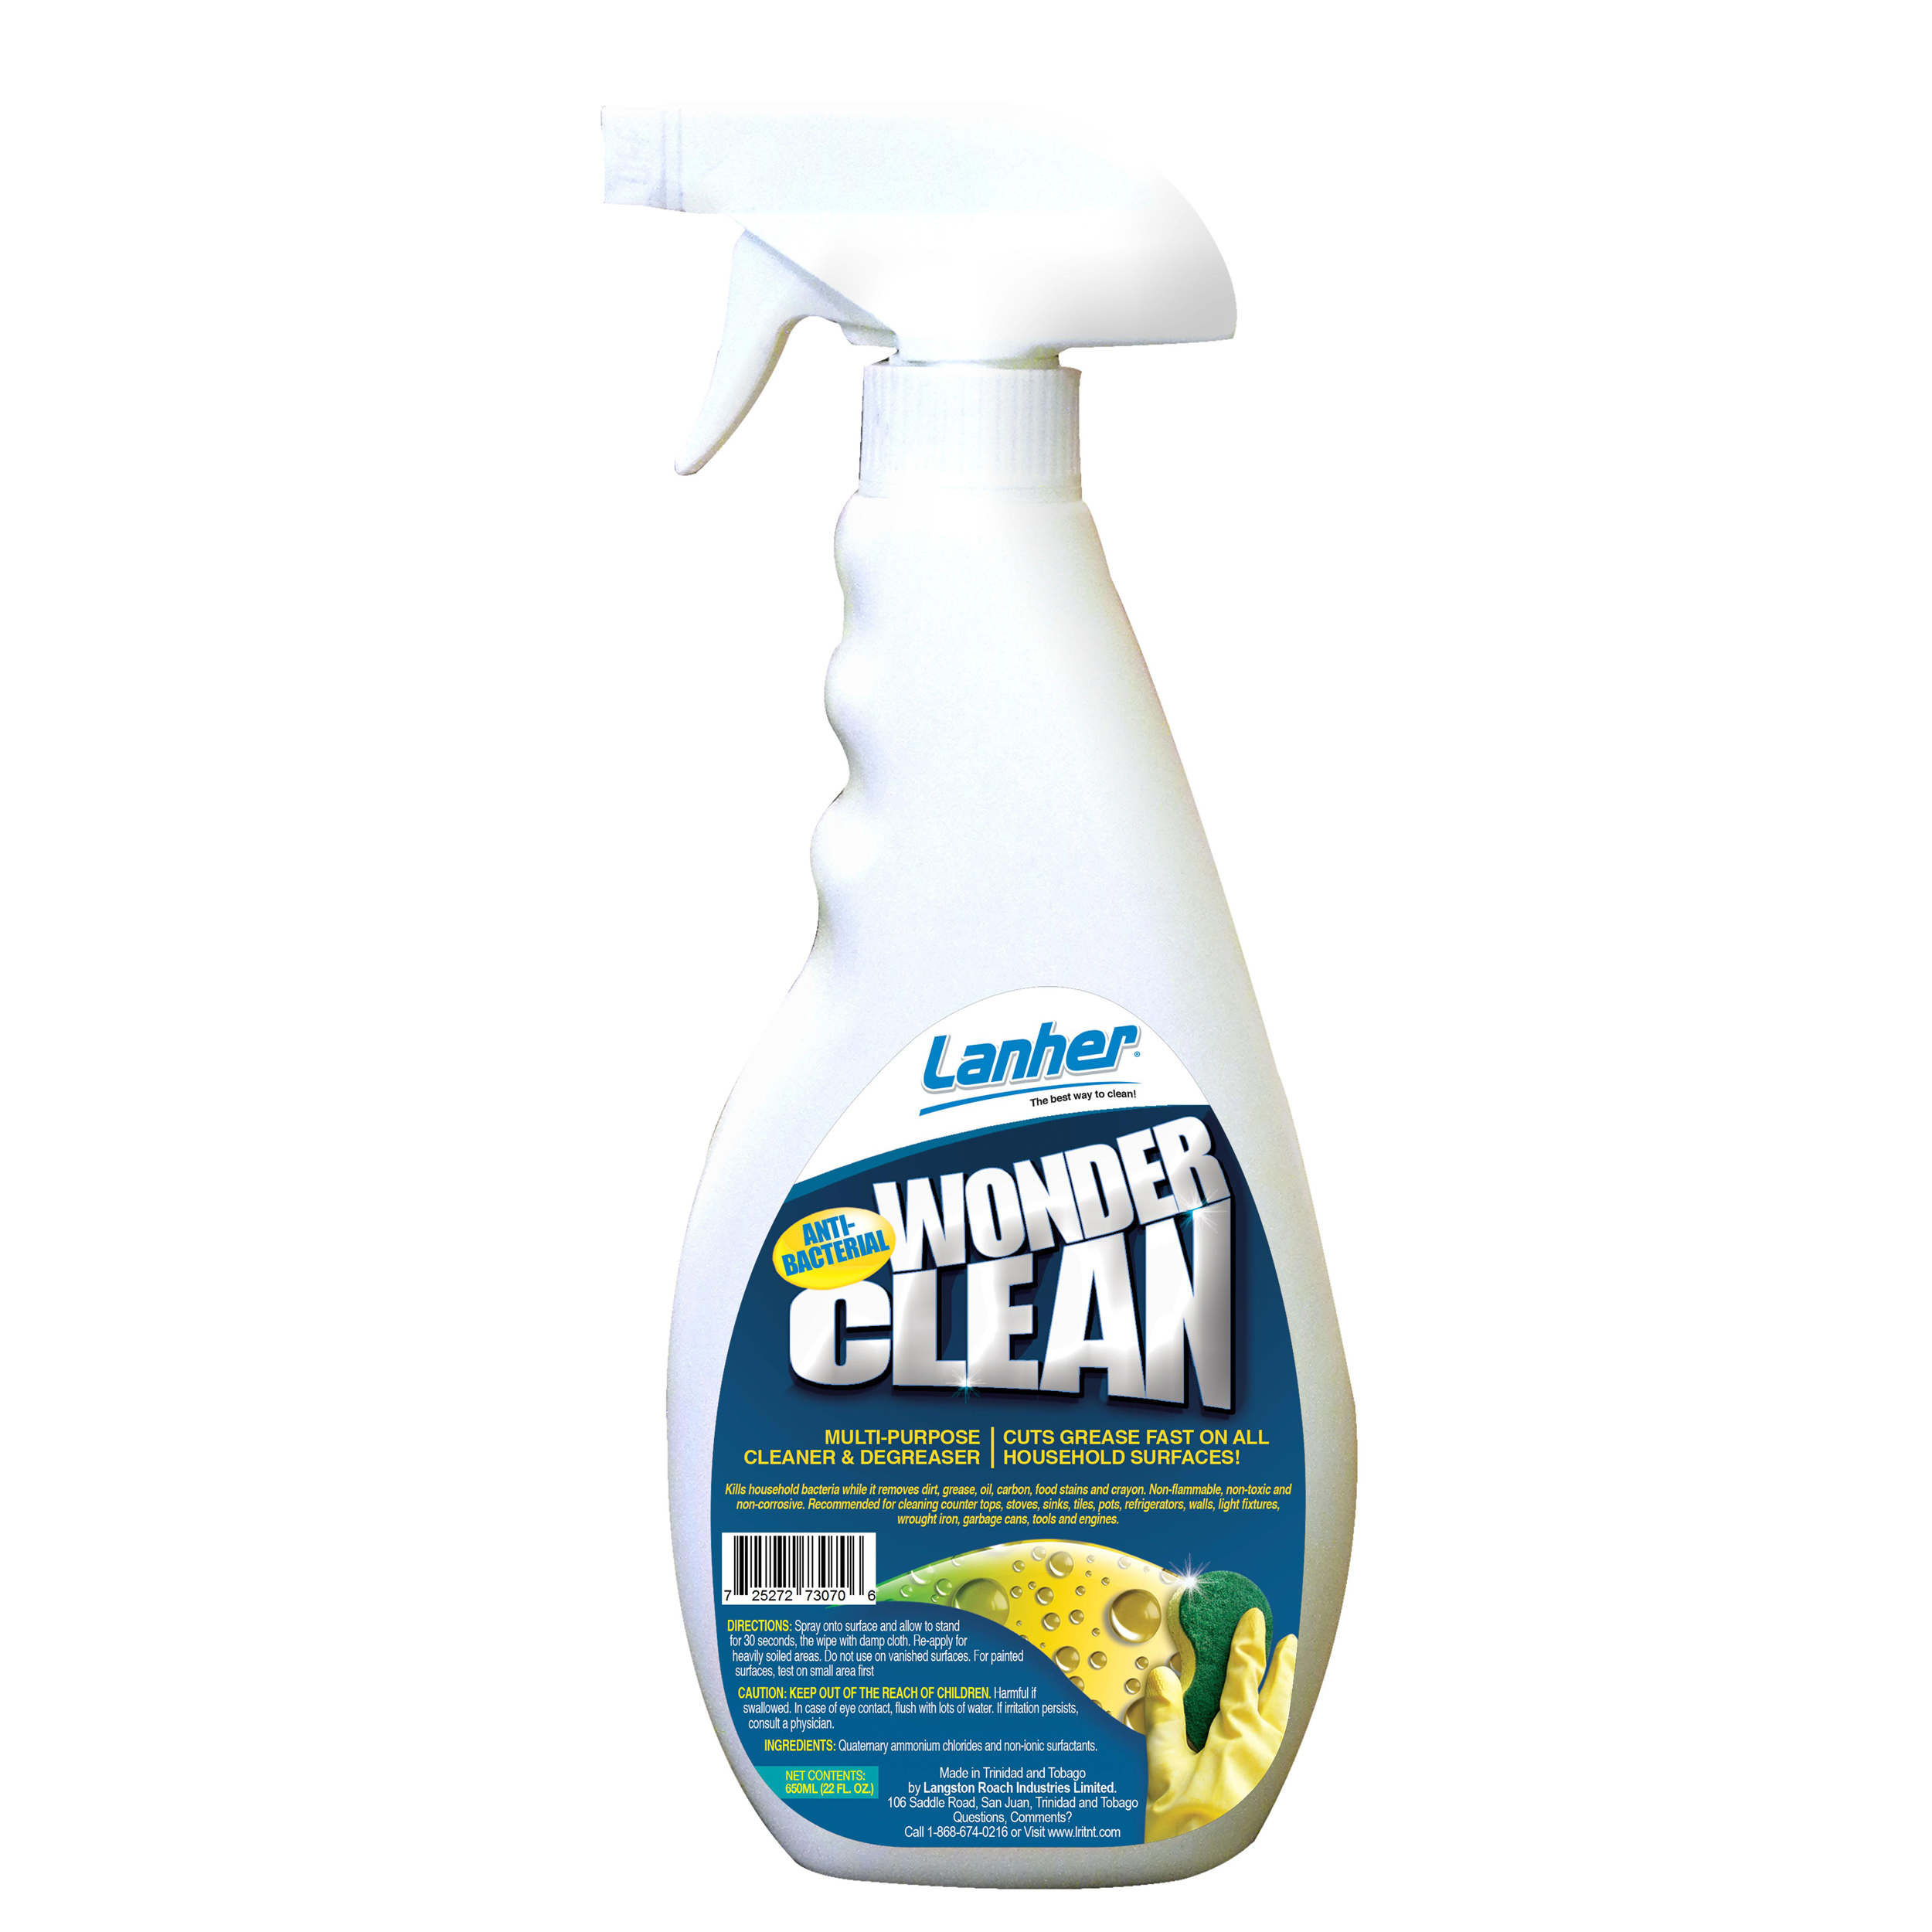 Lanher Wonder Clean – Langston Roach Industries Limited